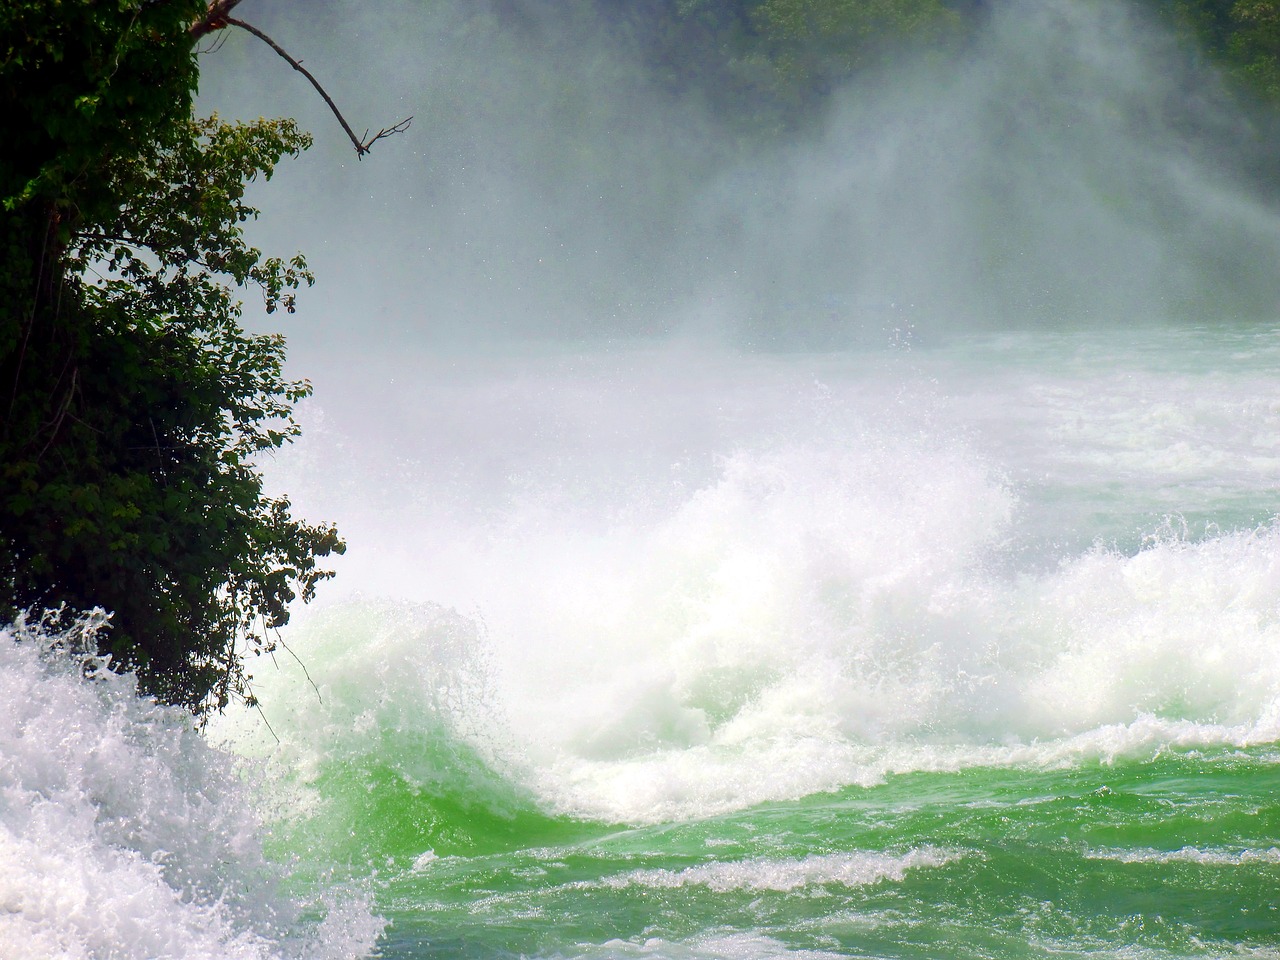 rhine falls waterfall spray free photo